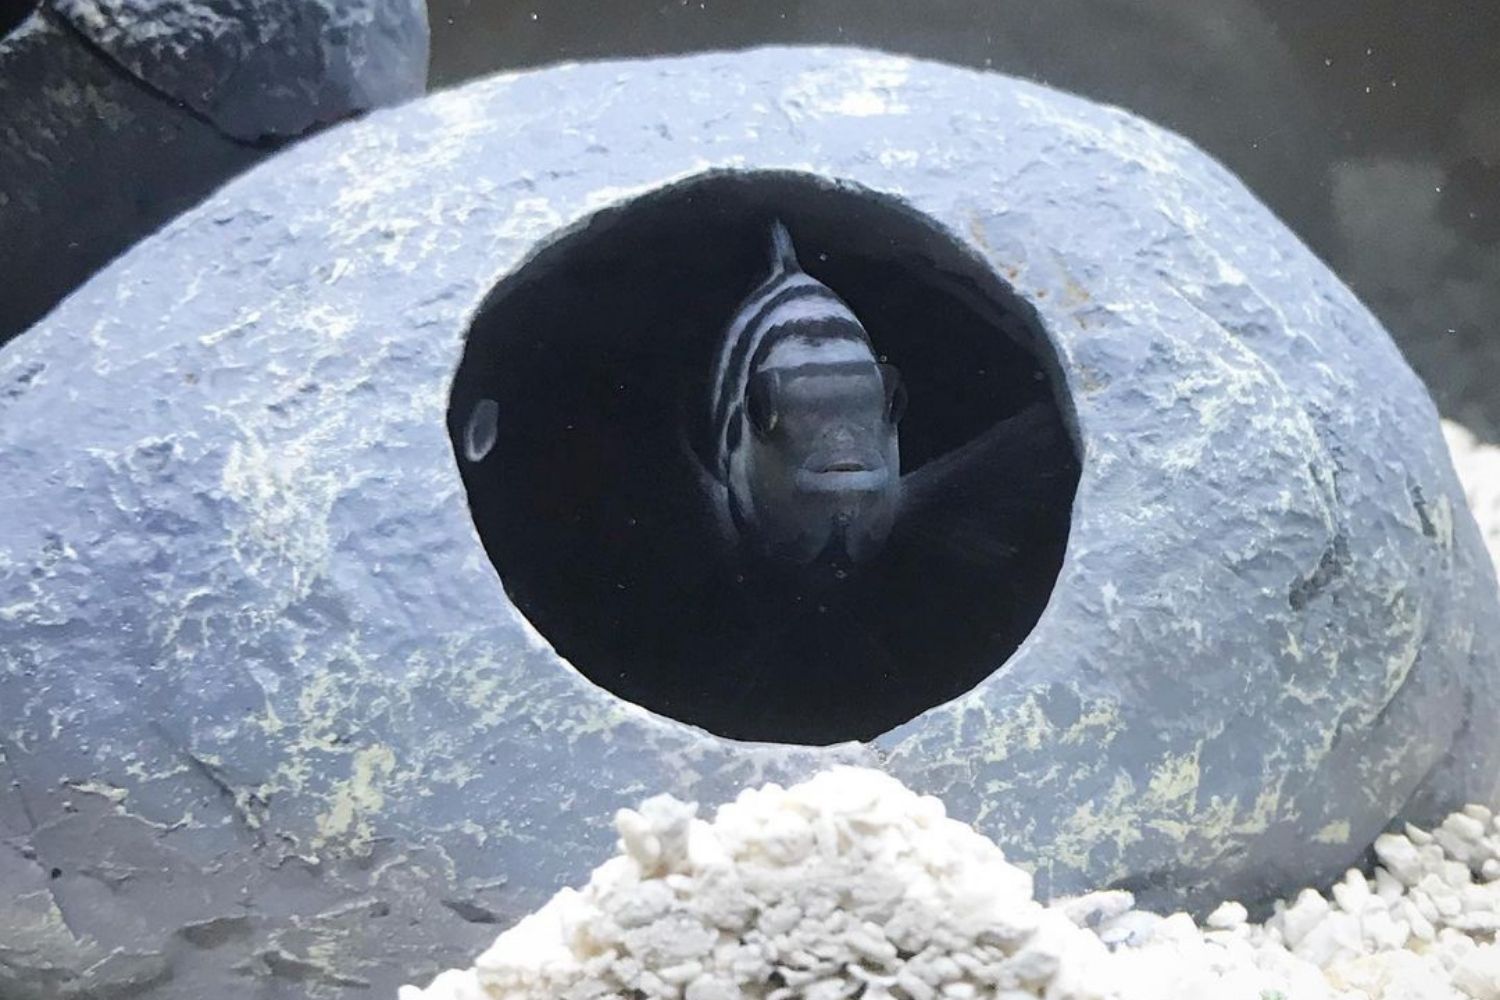 Convict Cichlid Fish under Rock